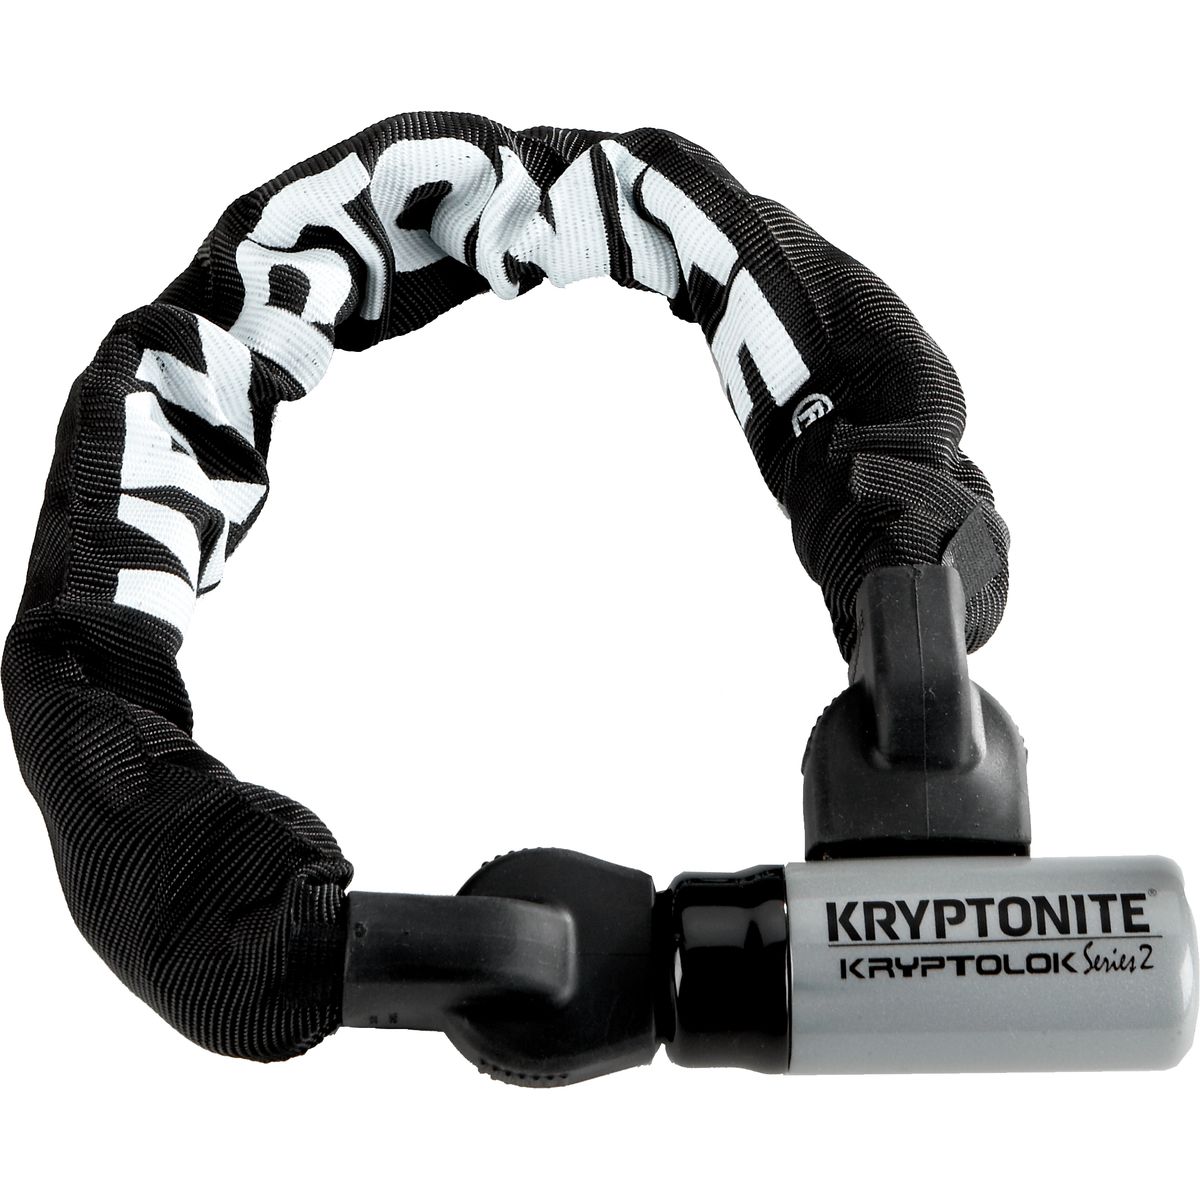 Kryptonite KryptoLok Series 2 955 Mini Integrated Chain Lock Black/Grey, 55cm